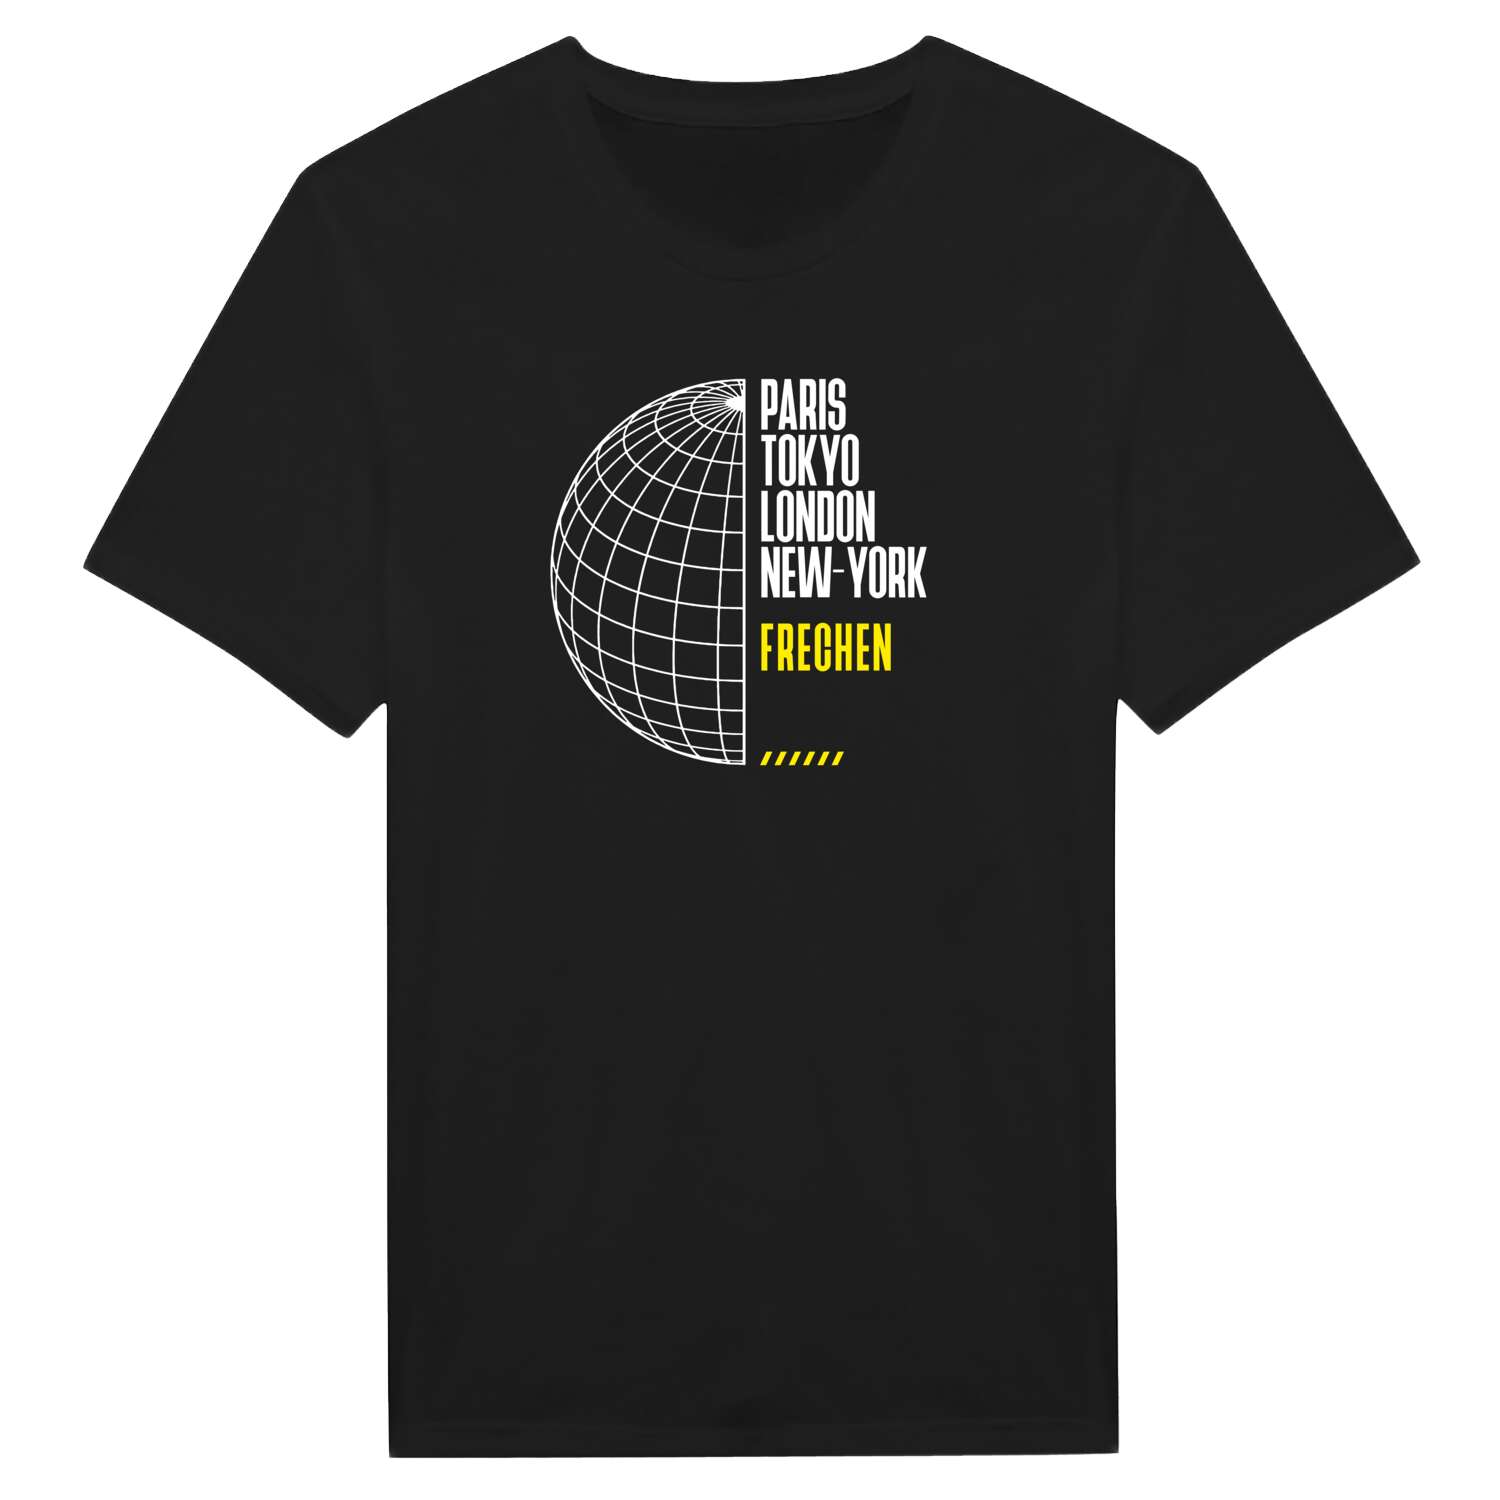 Frechen T-Shirt »Paris Tokyo London«